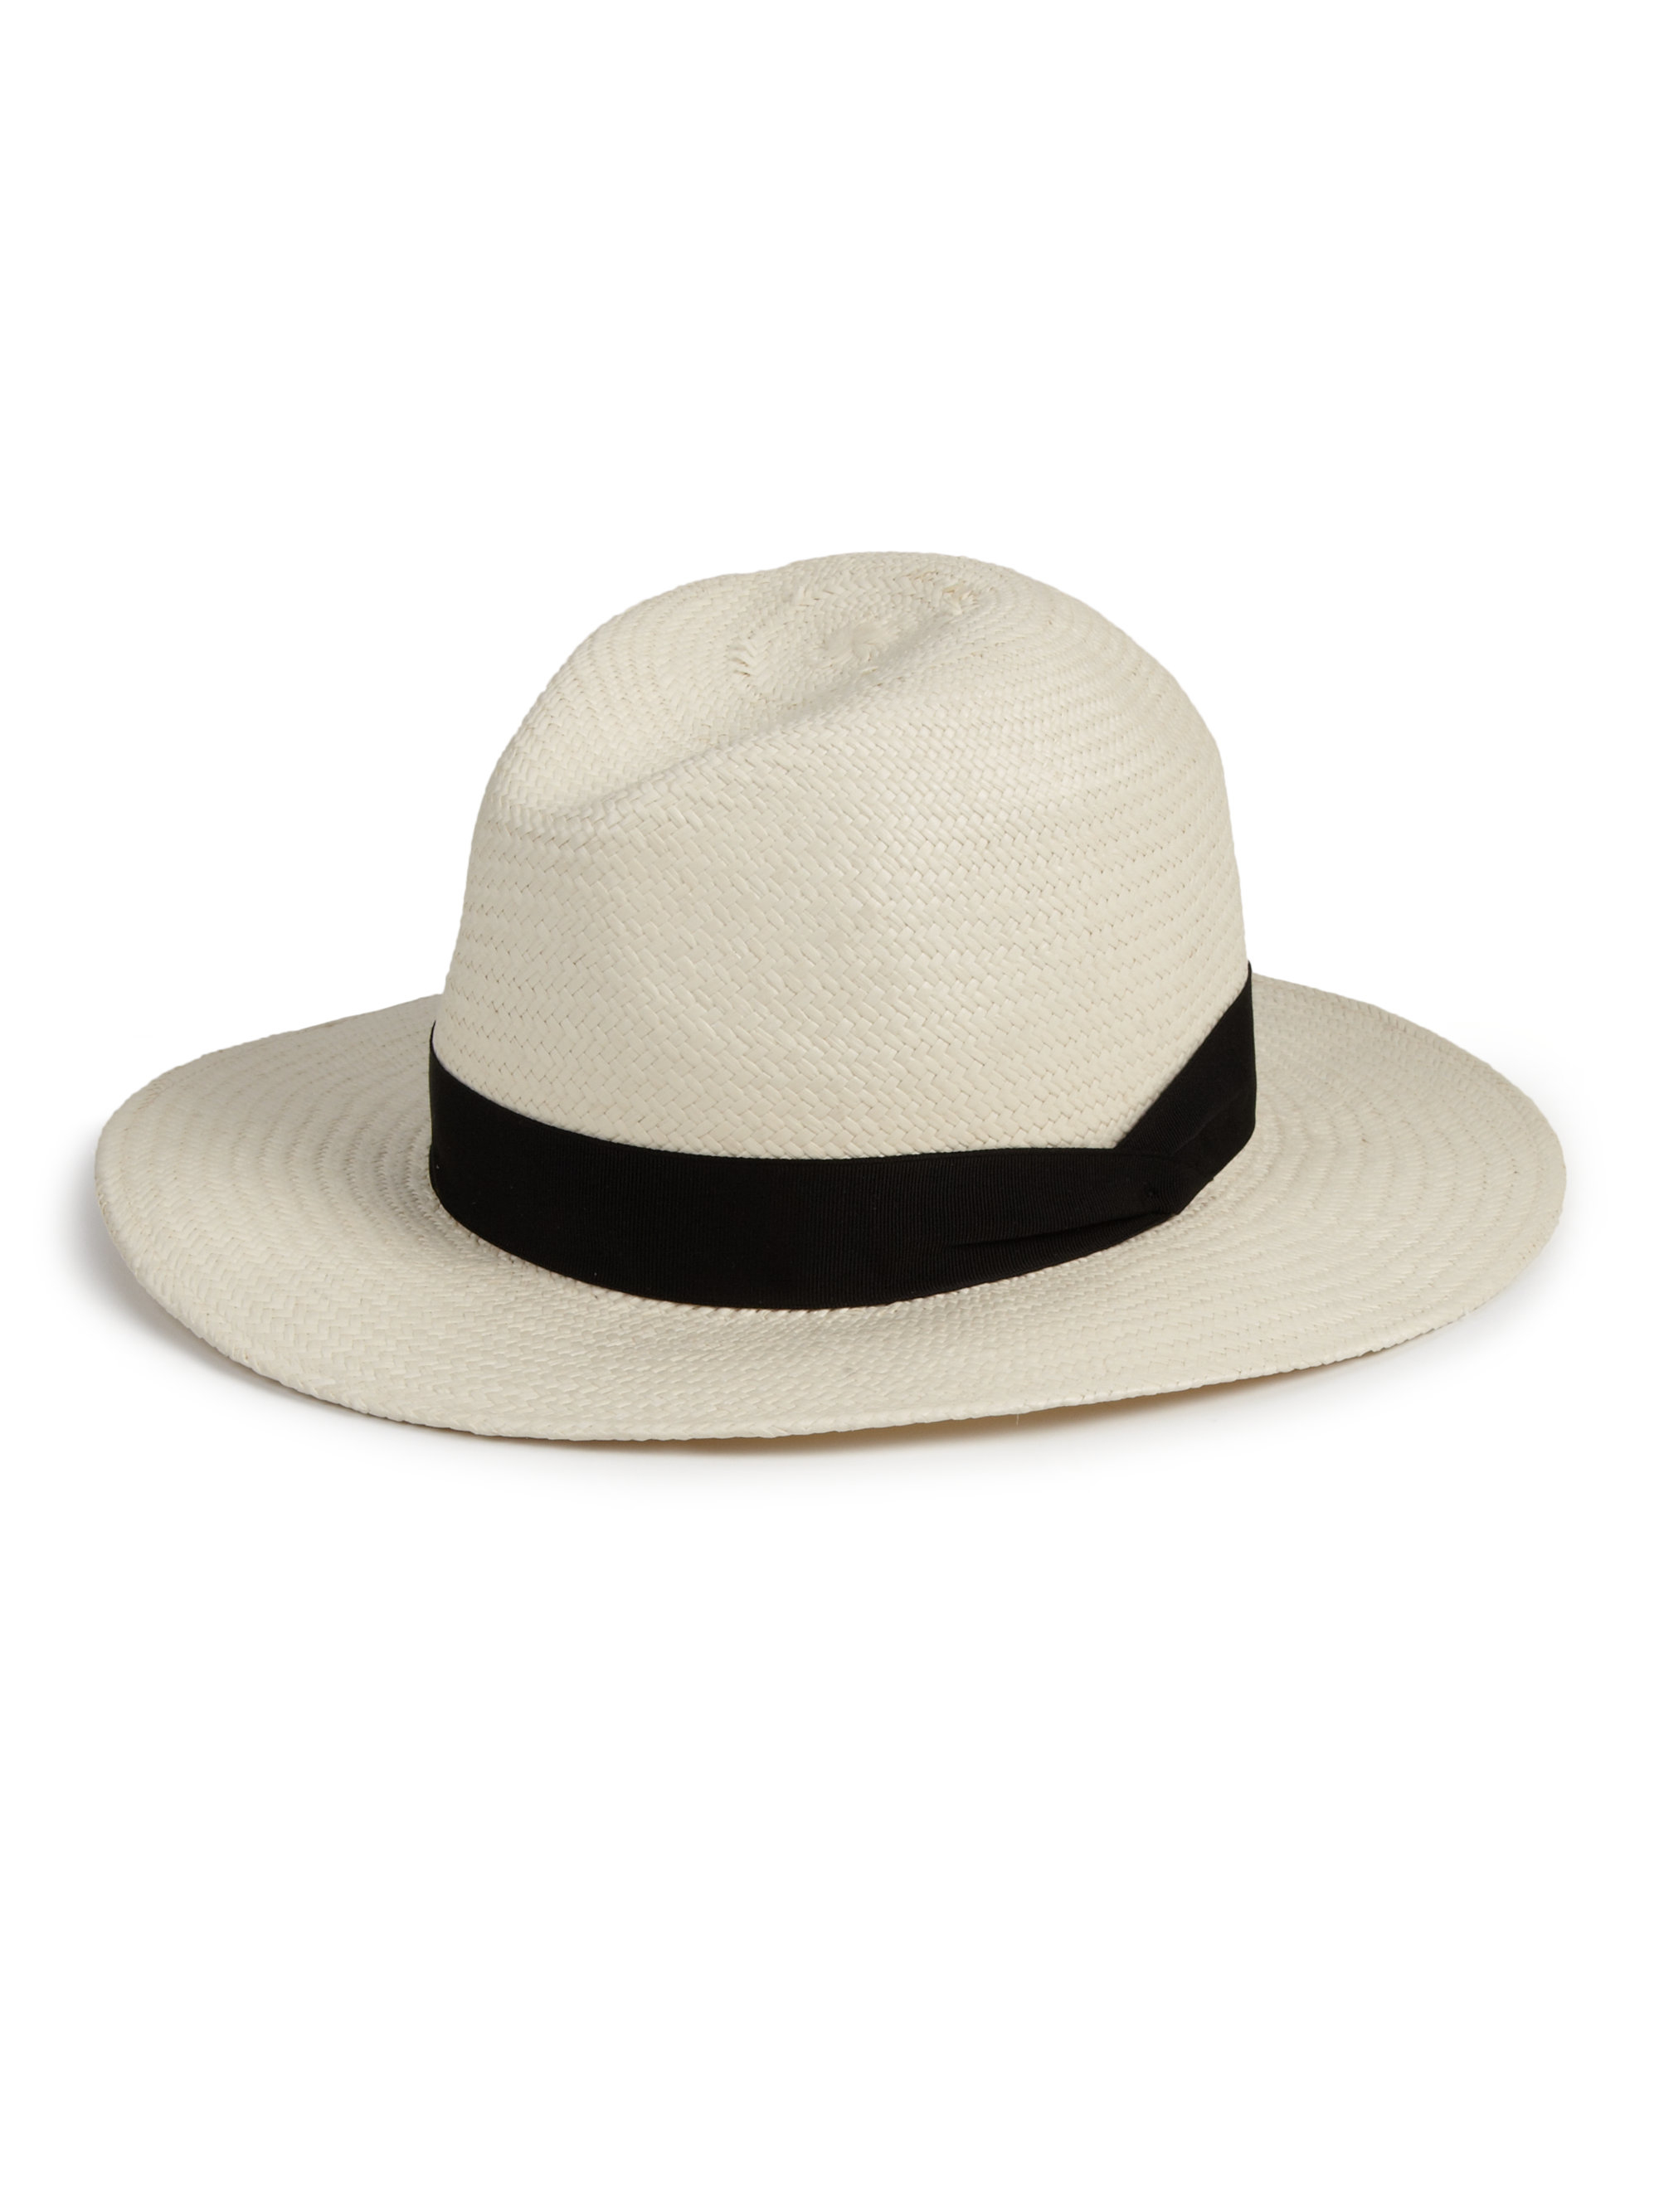 Lyst - Rag & bone Panama Hat in White